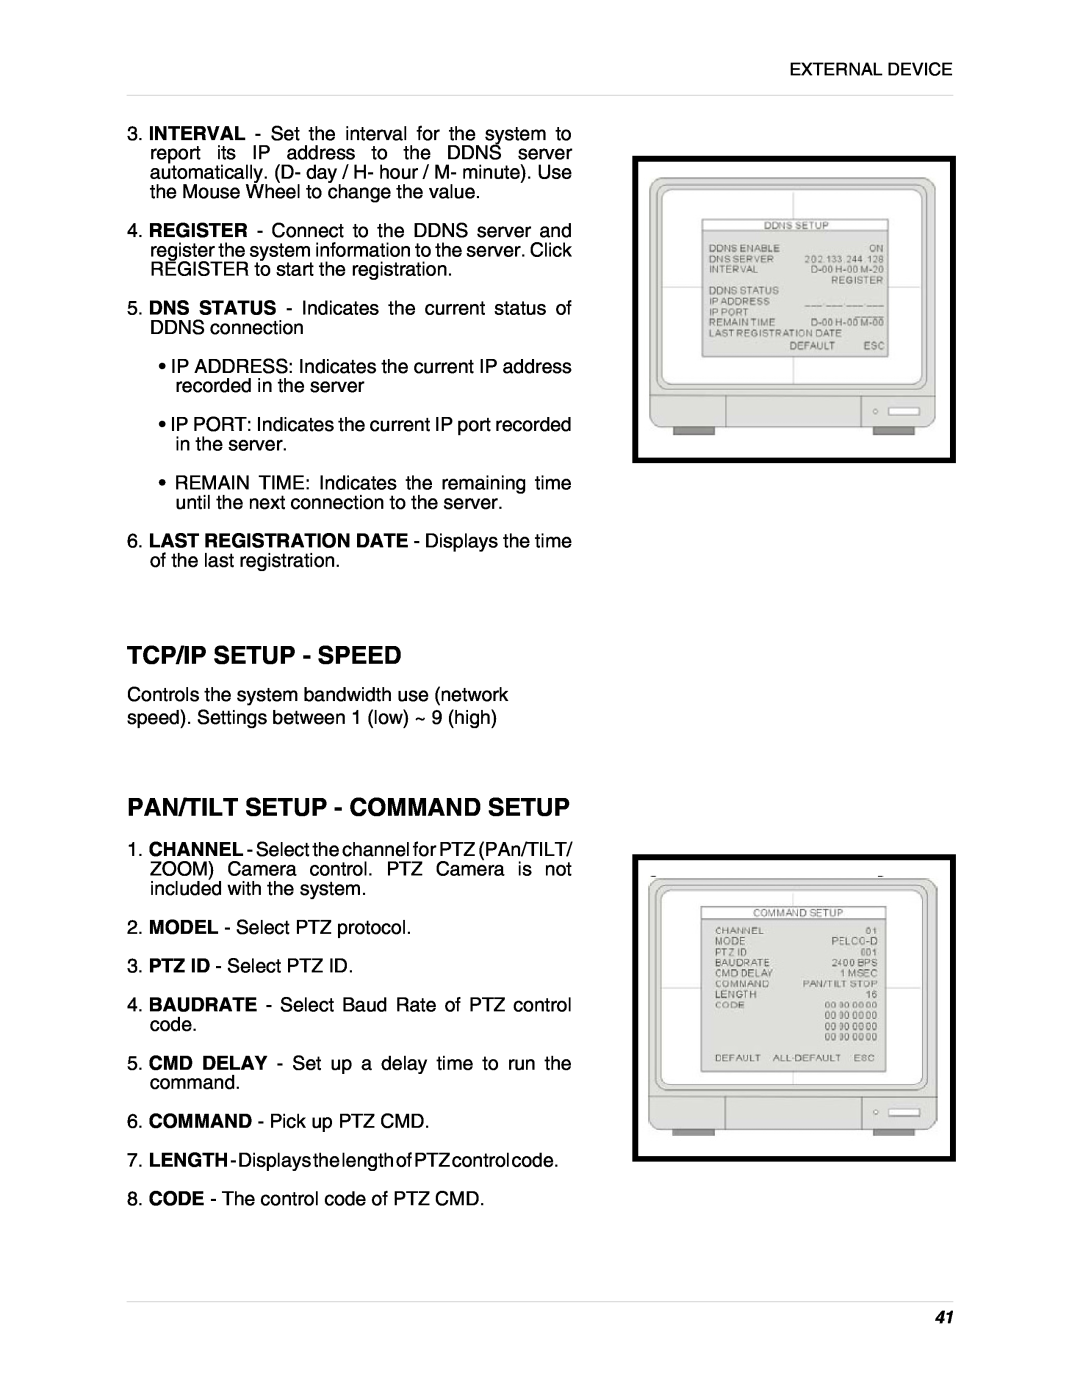 LOREX Technology L15D400 instruction manual Tcp/Ip Setup - Speed, Pan/Tilt Setup - Command Setup 